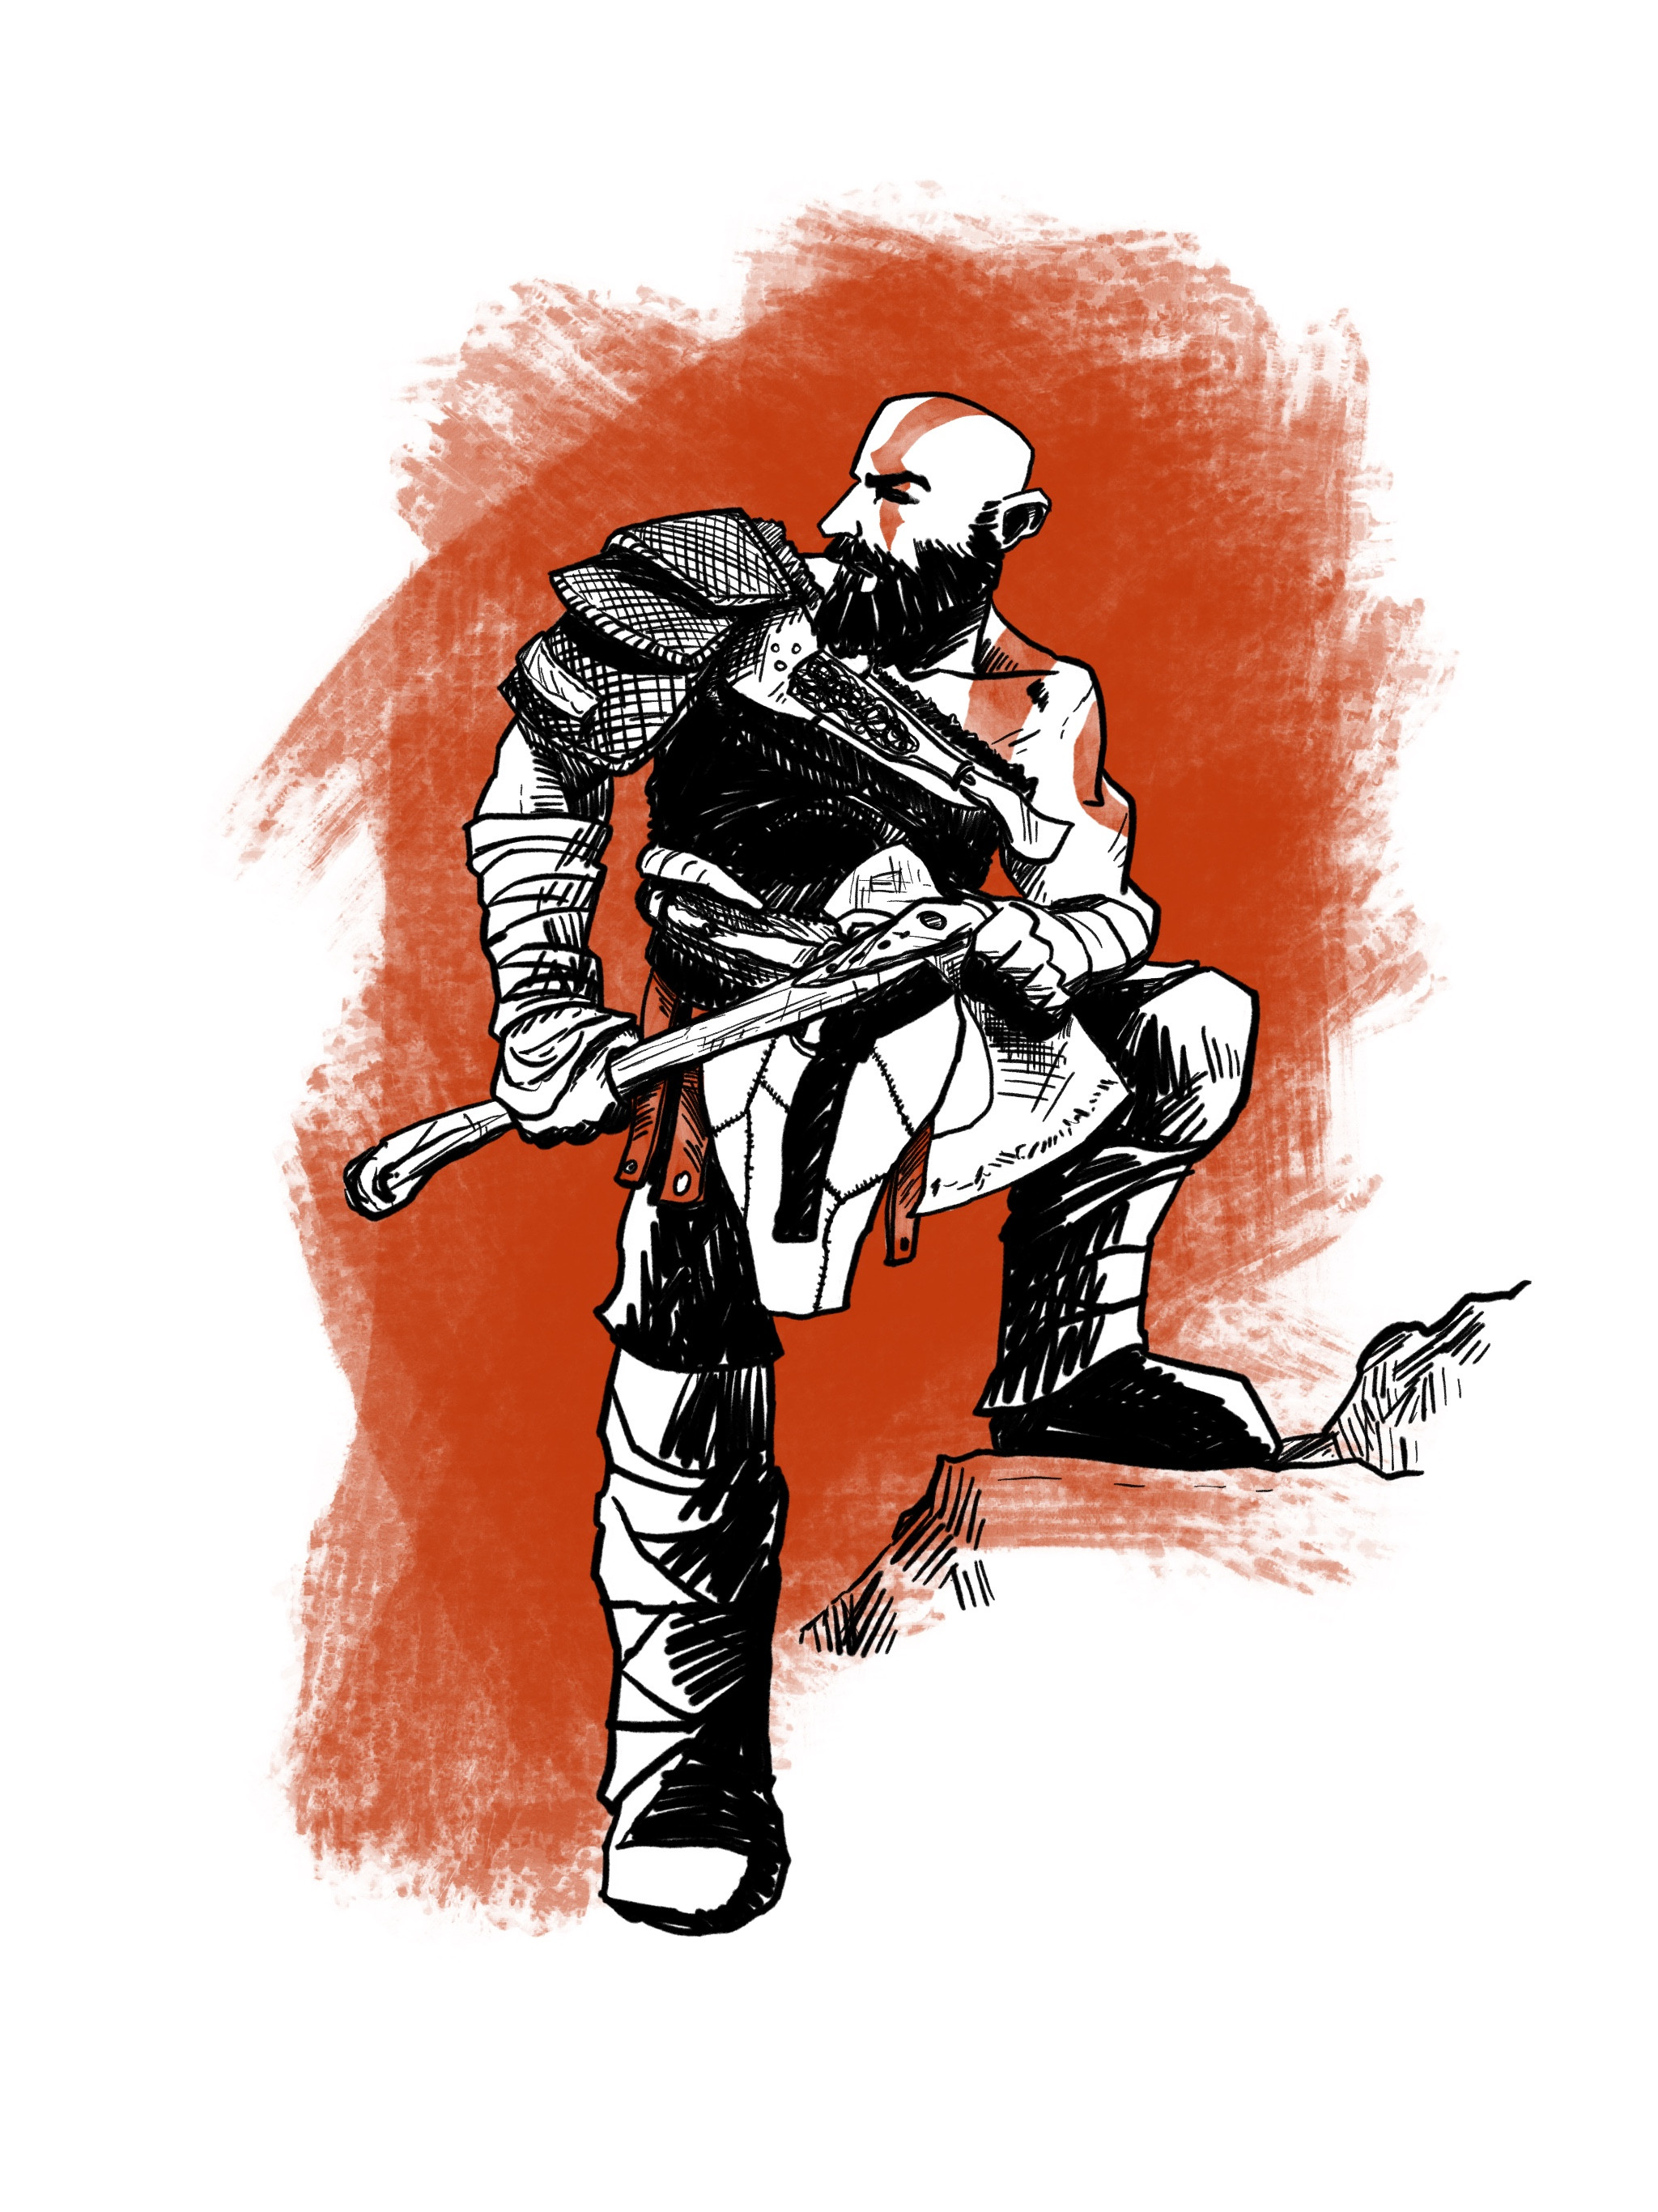 God of War 4 Kratos - Digital in Procreate